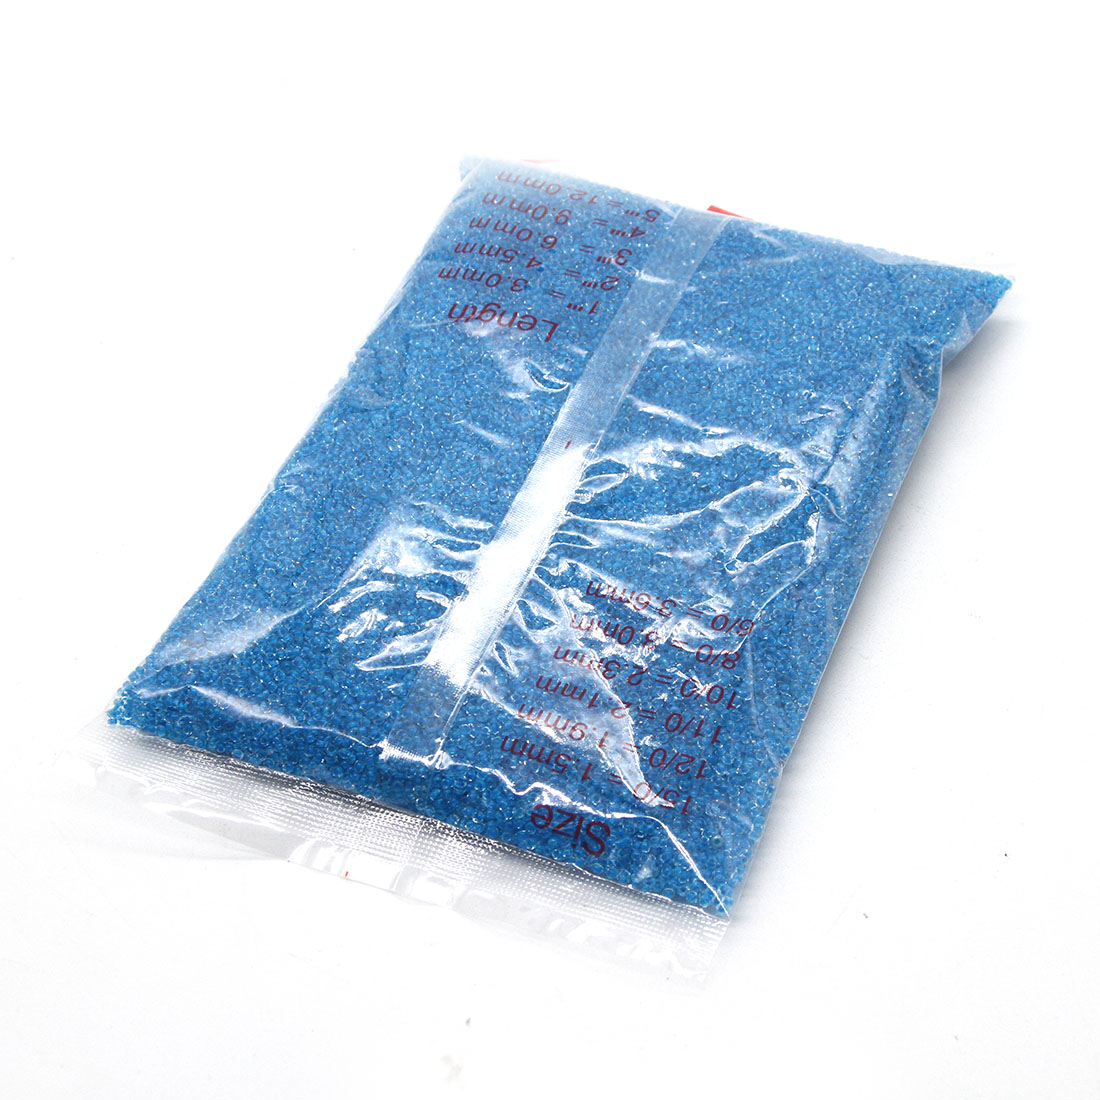 Lake blue 3mm 10,000 packs